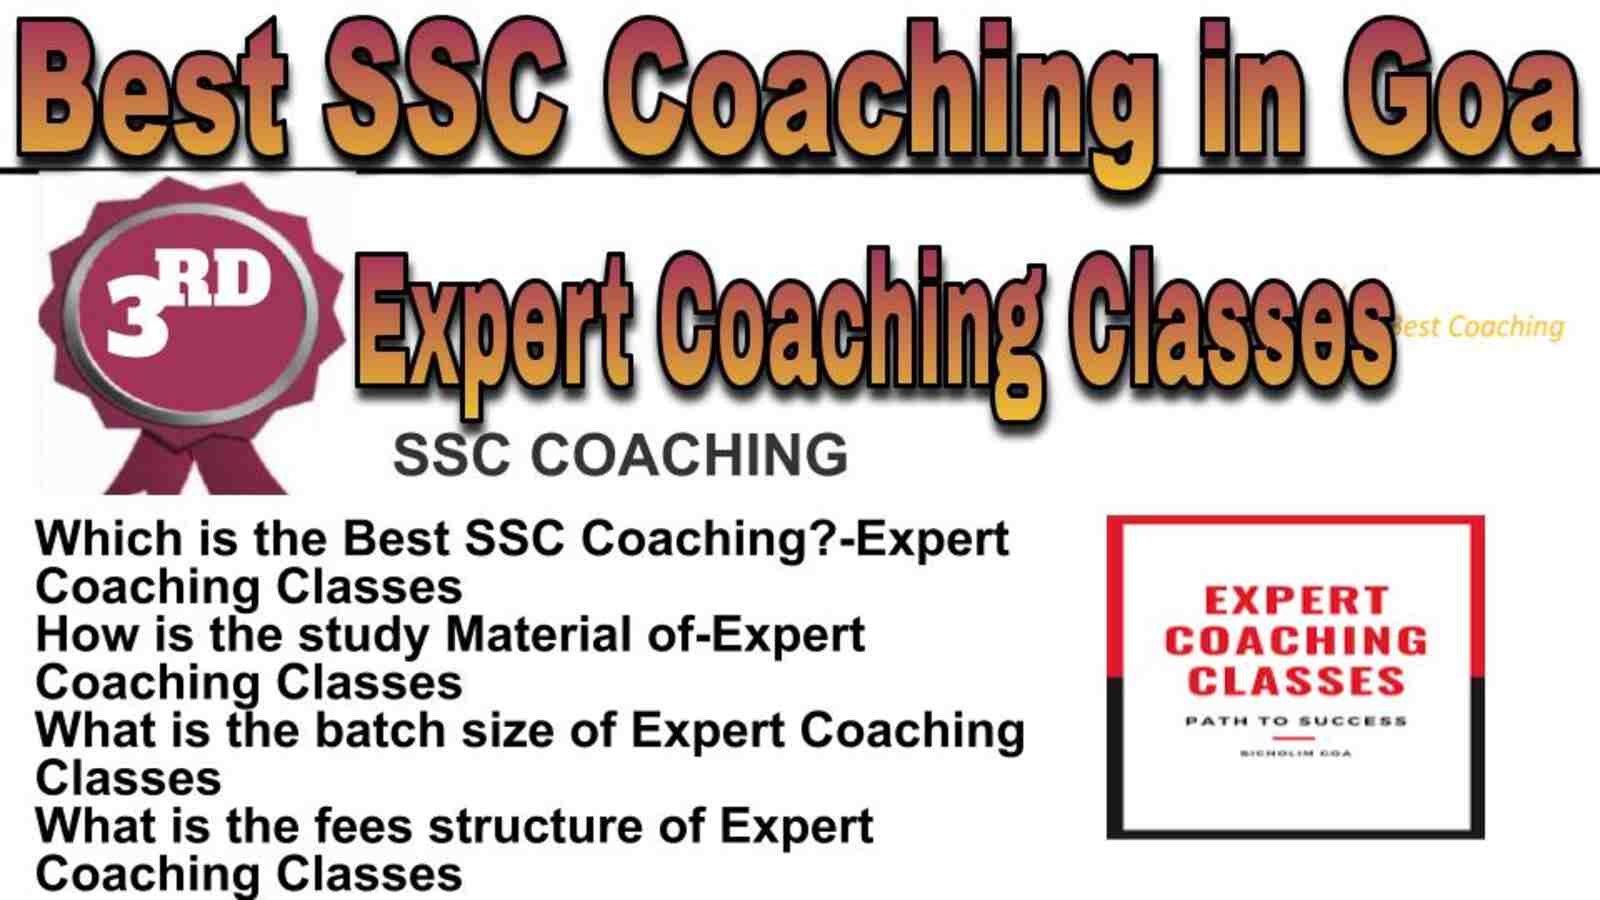 Rank 3 best SSC coaching in Goa